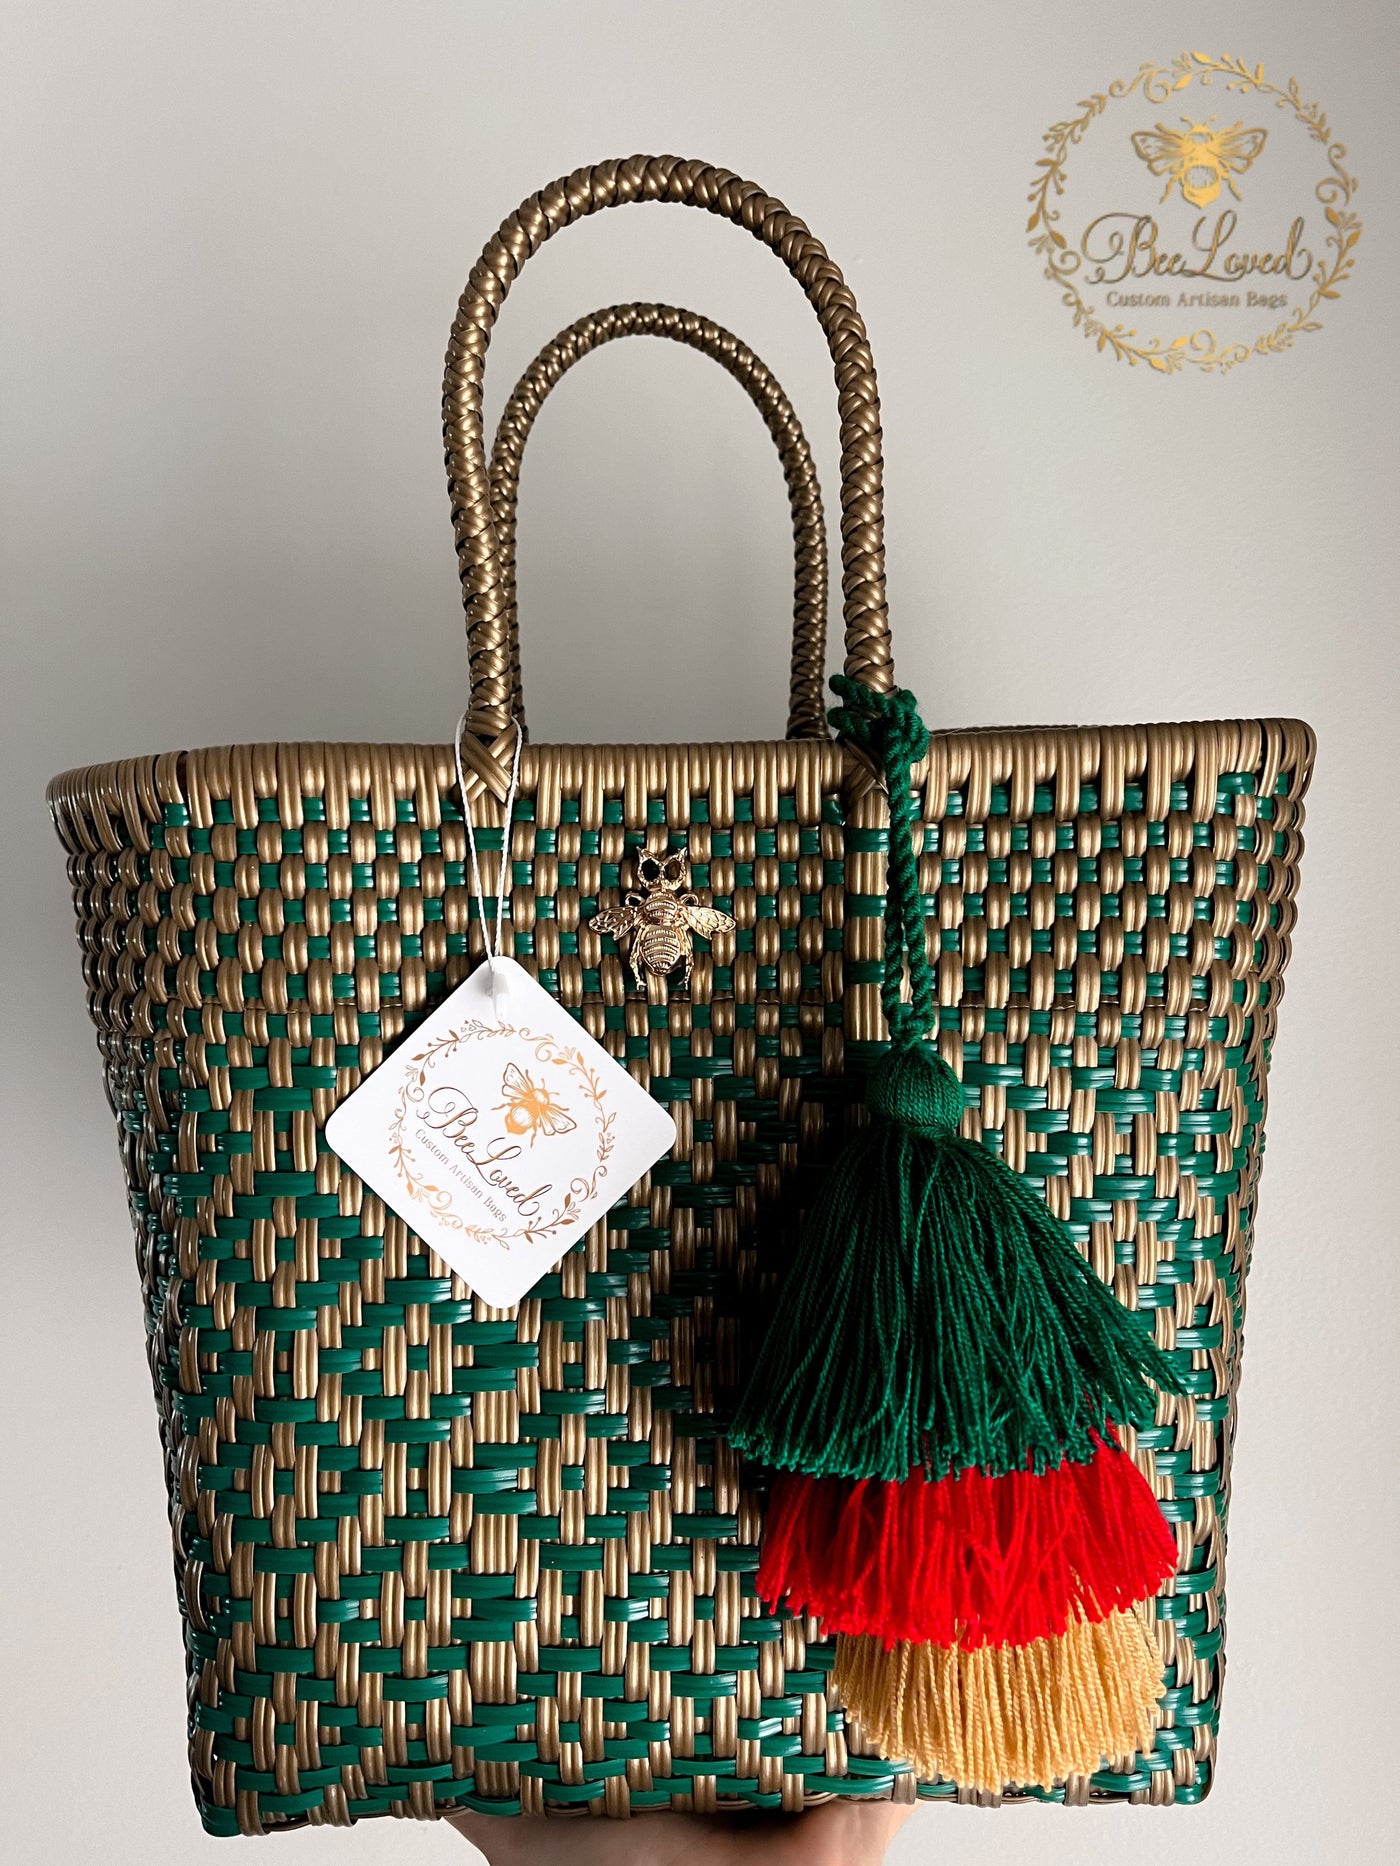 BeeLoved Custom Artisan Bags and Gifts Handbags Small Green and Gold Small Beech Bag